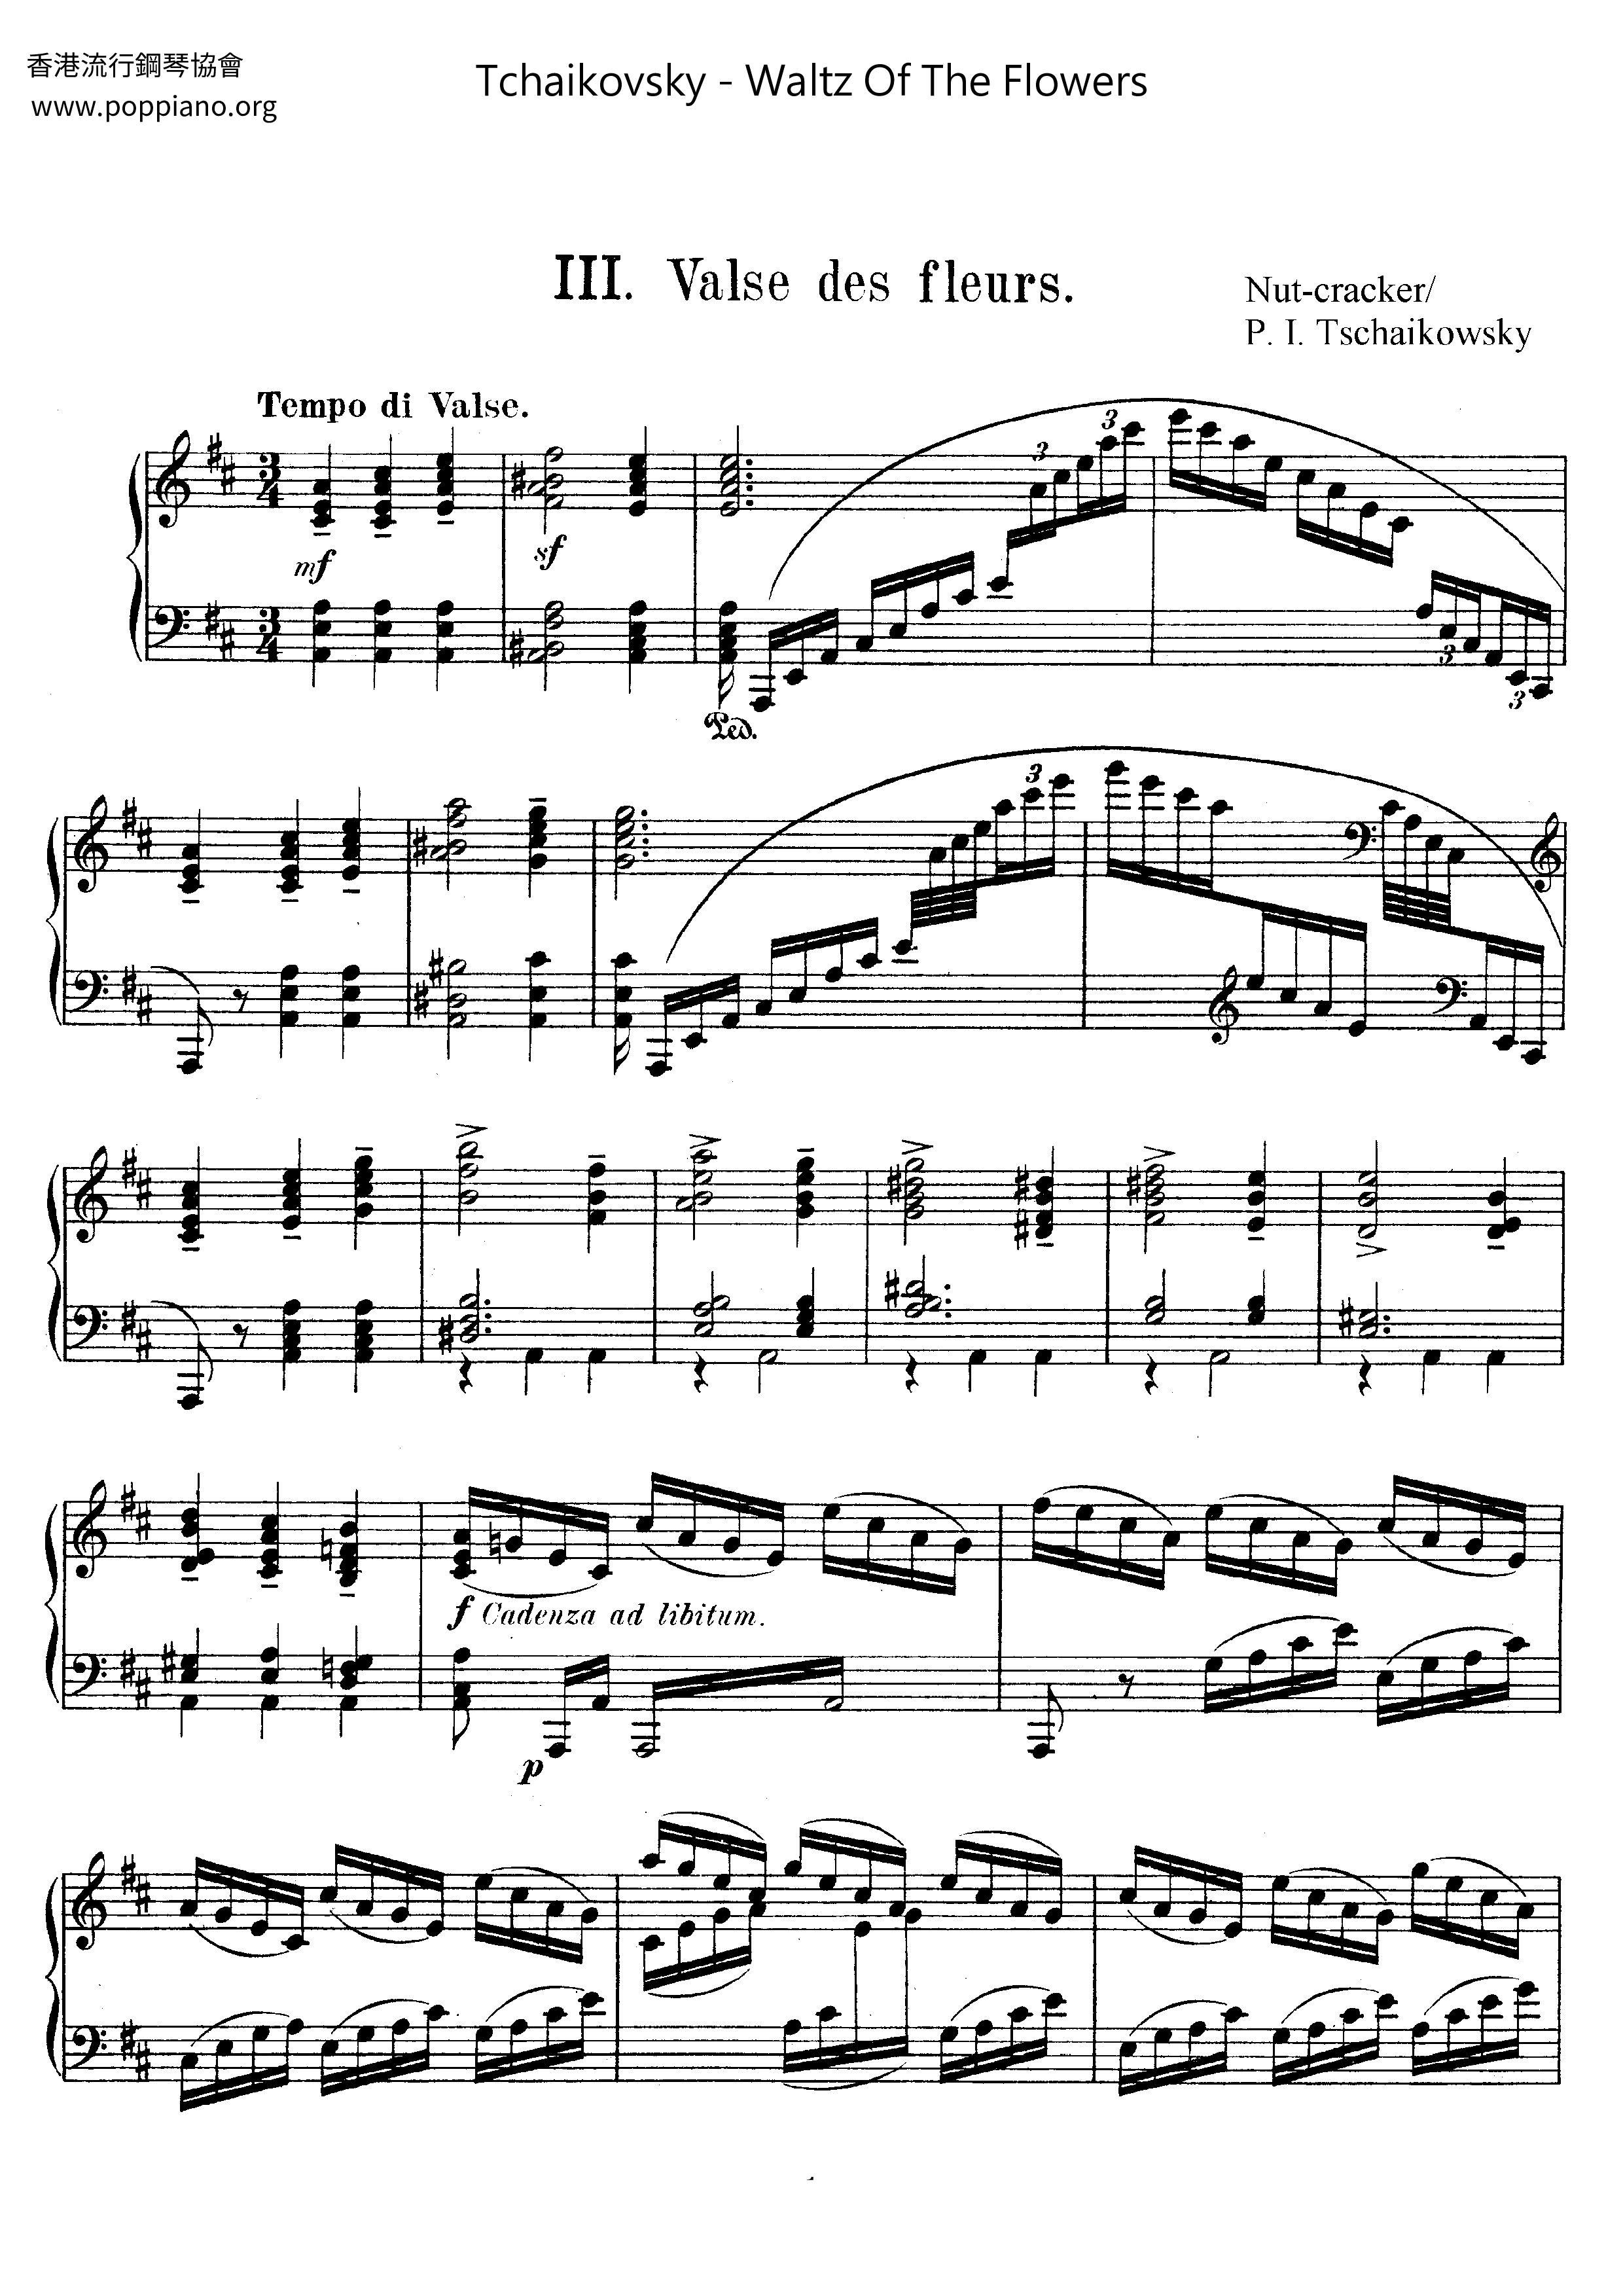 Tchaikovsky: The Nutcracker, Op. 71, Act II: No. 13, Waltz of the Flowersピアノ譜